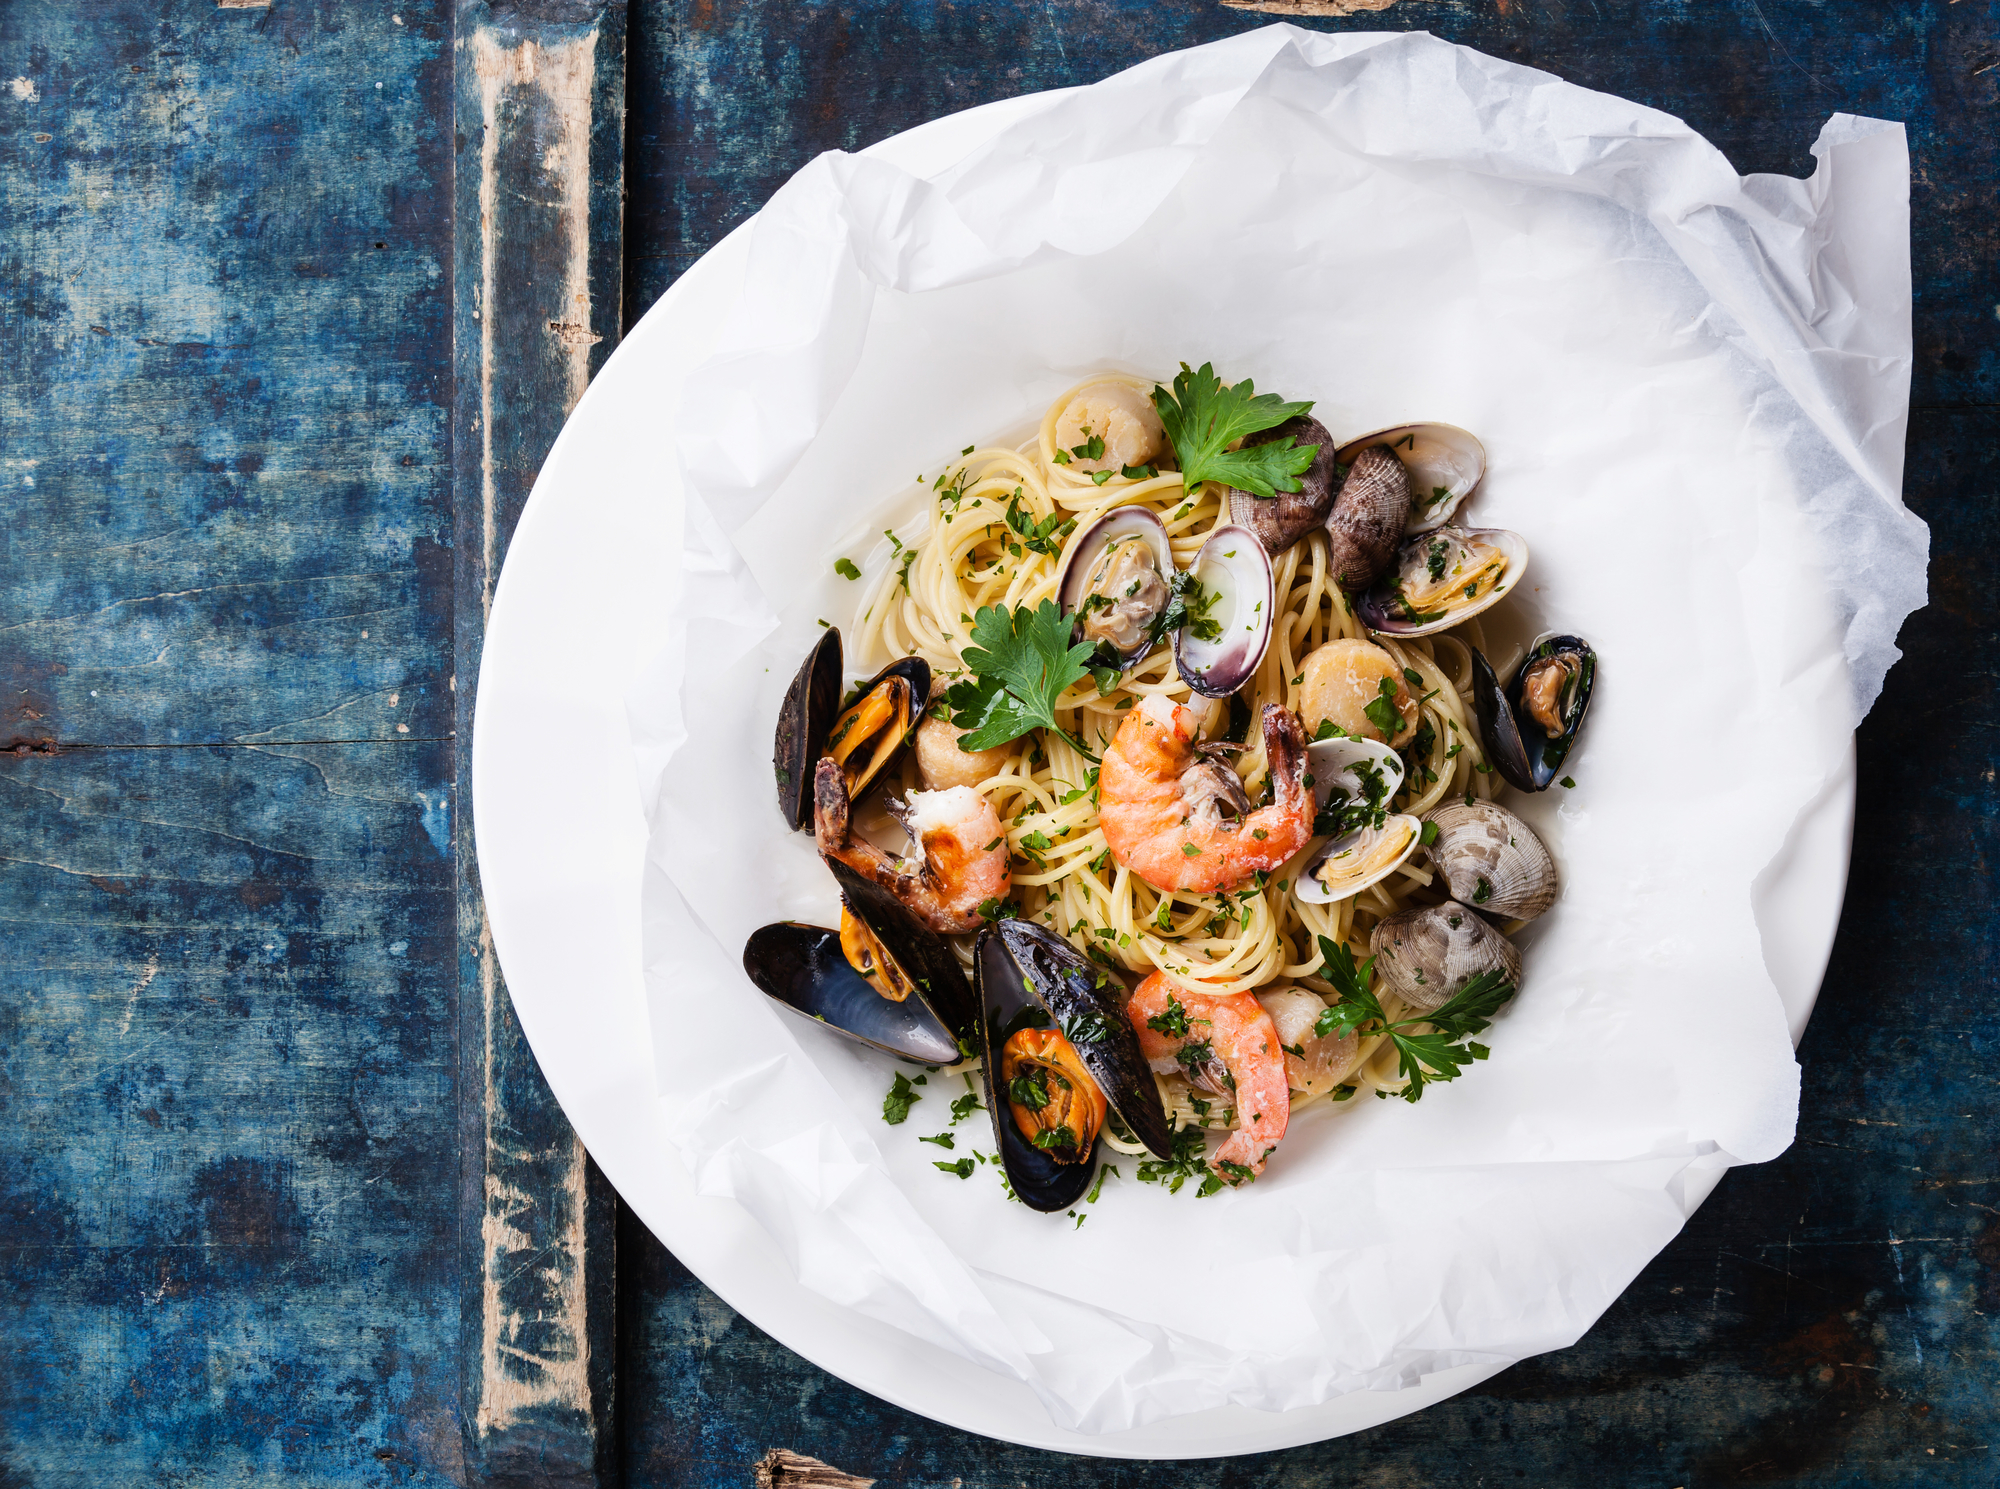 Seafood pasta - Spaghetti with clams, prawns, sea scallops on white plate